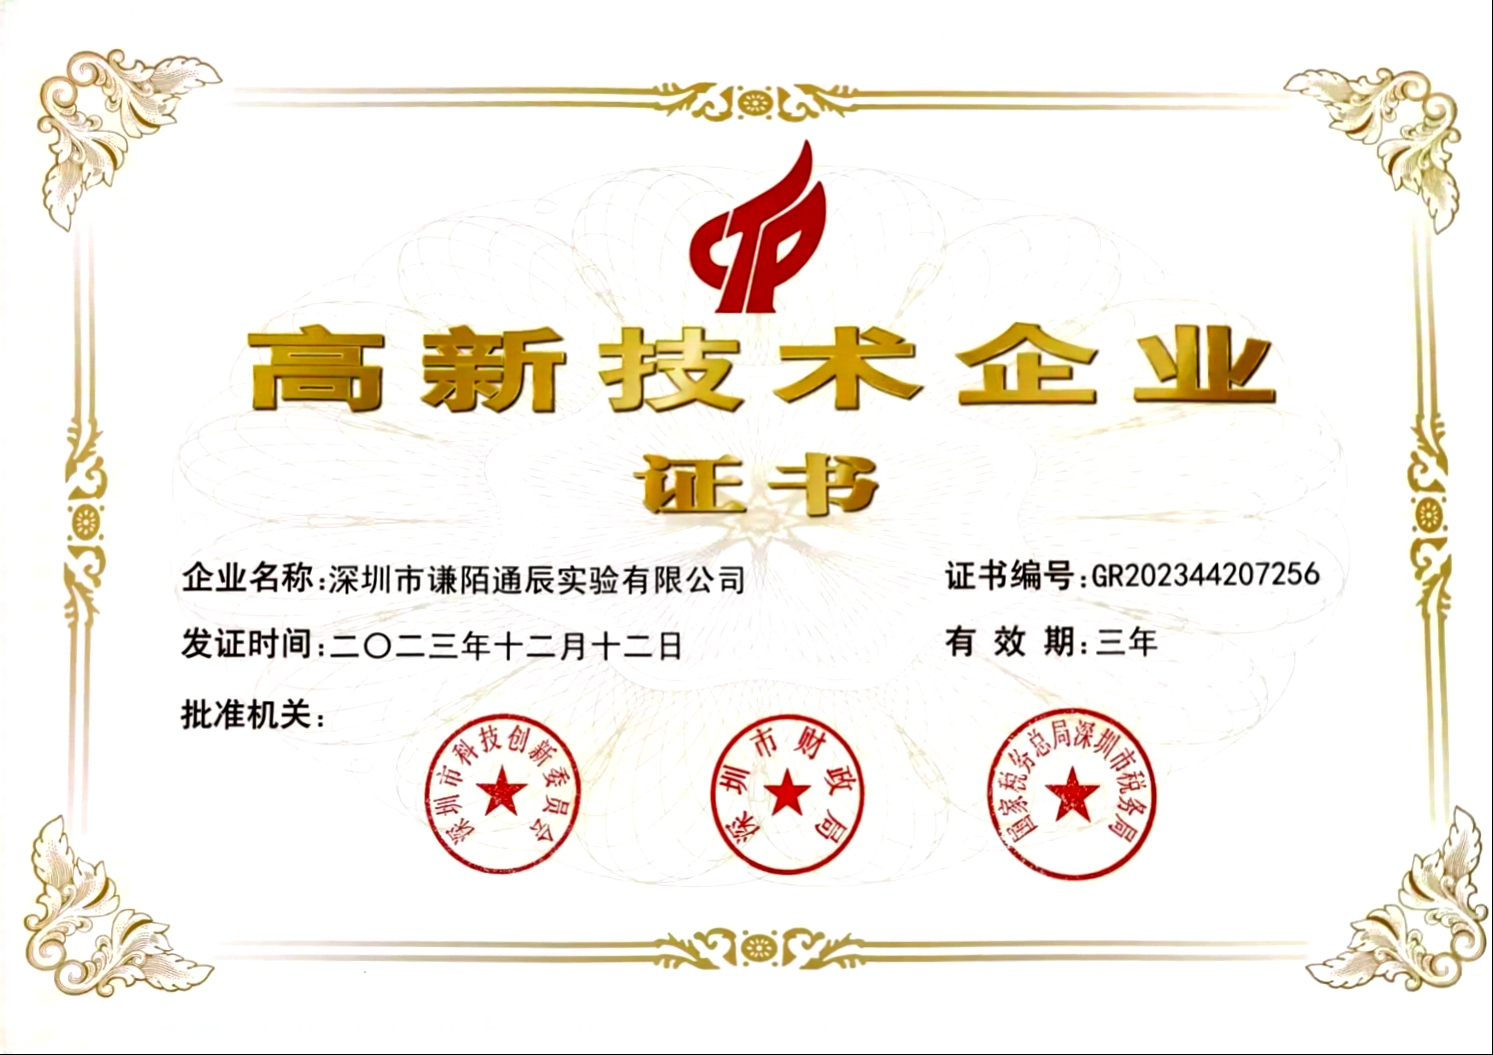 Gaoxin Certification